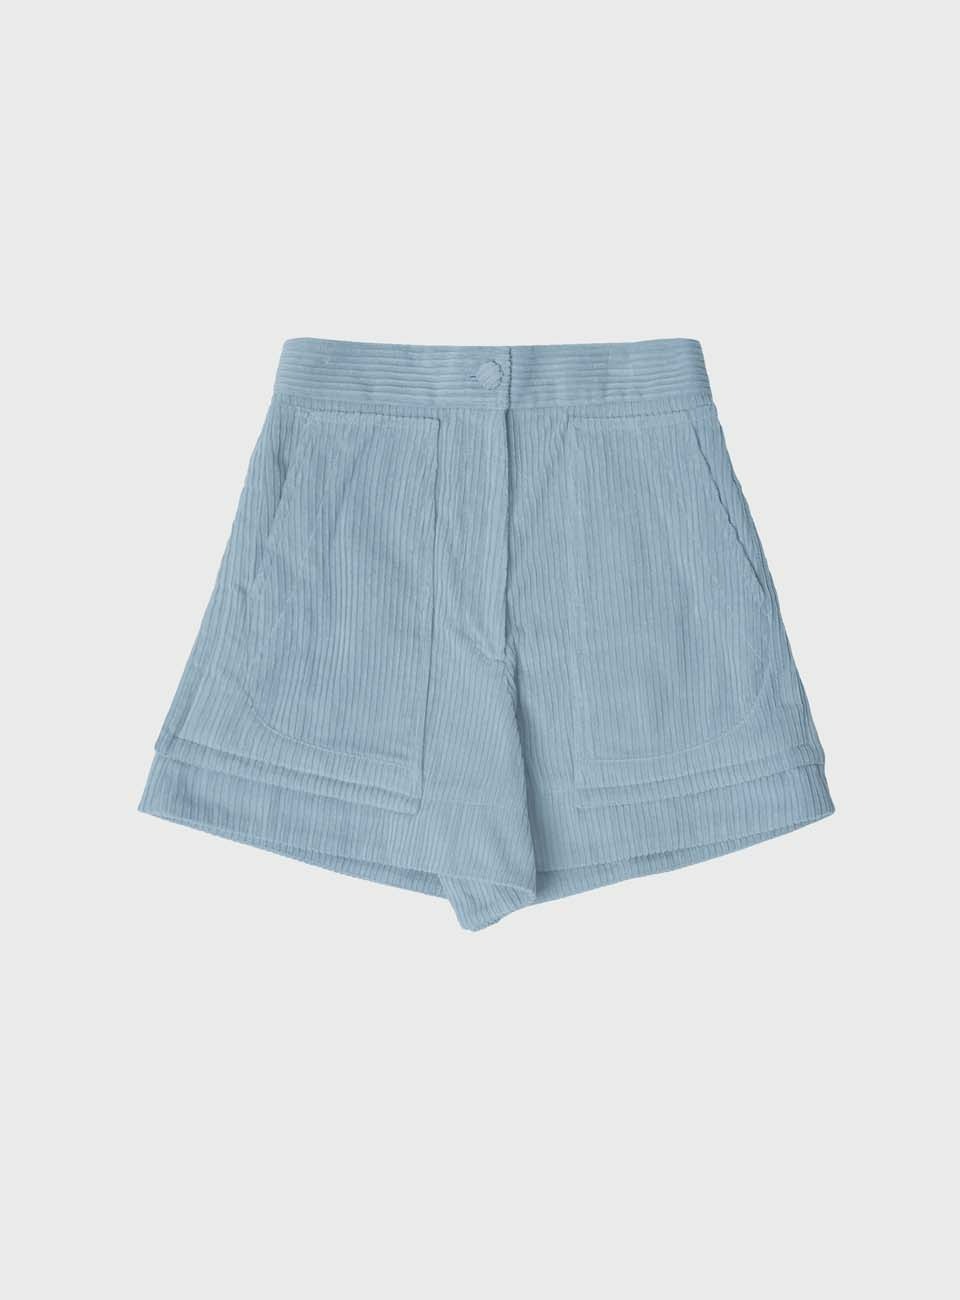 Corduroy shorts (SkyBlue)